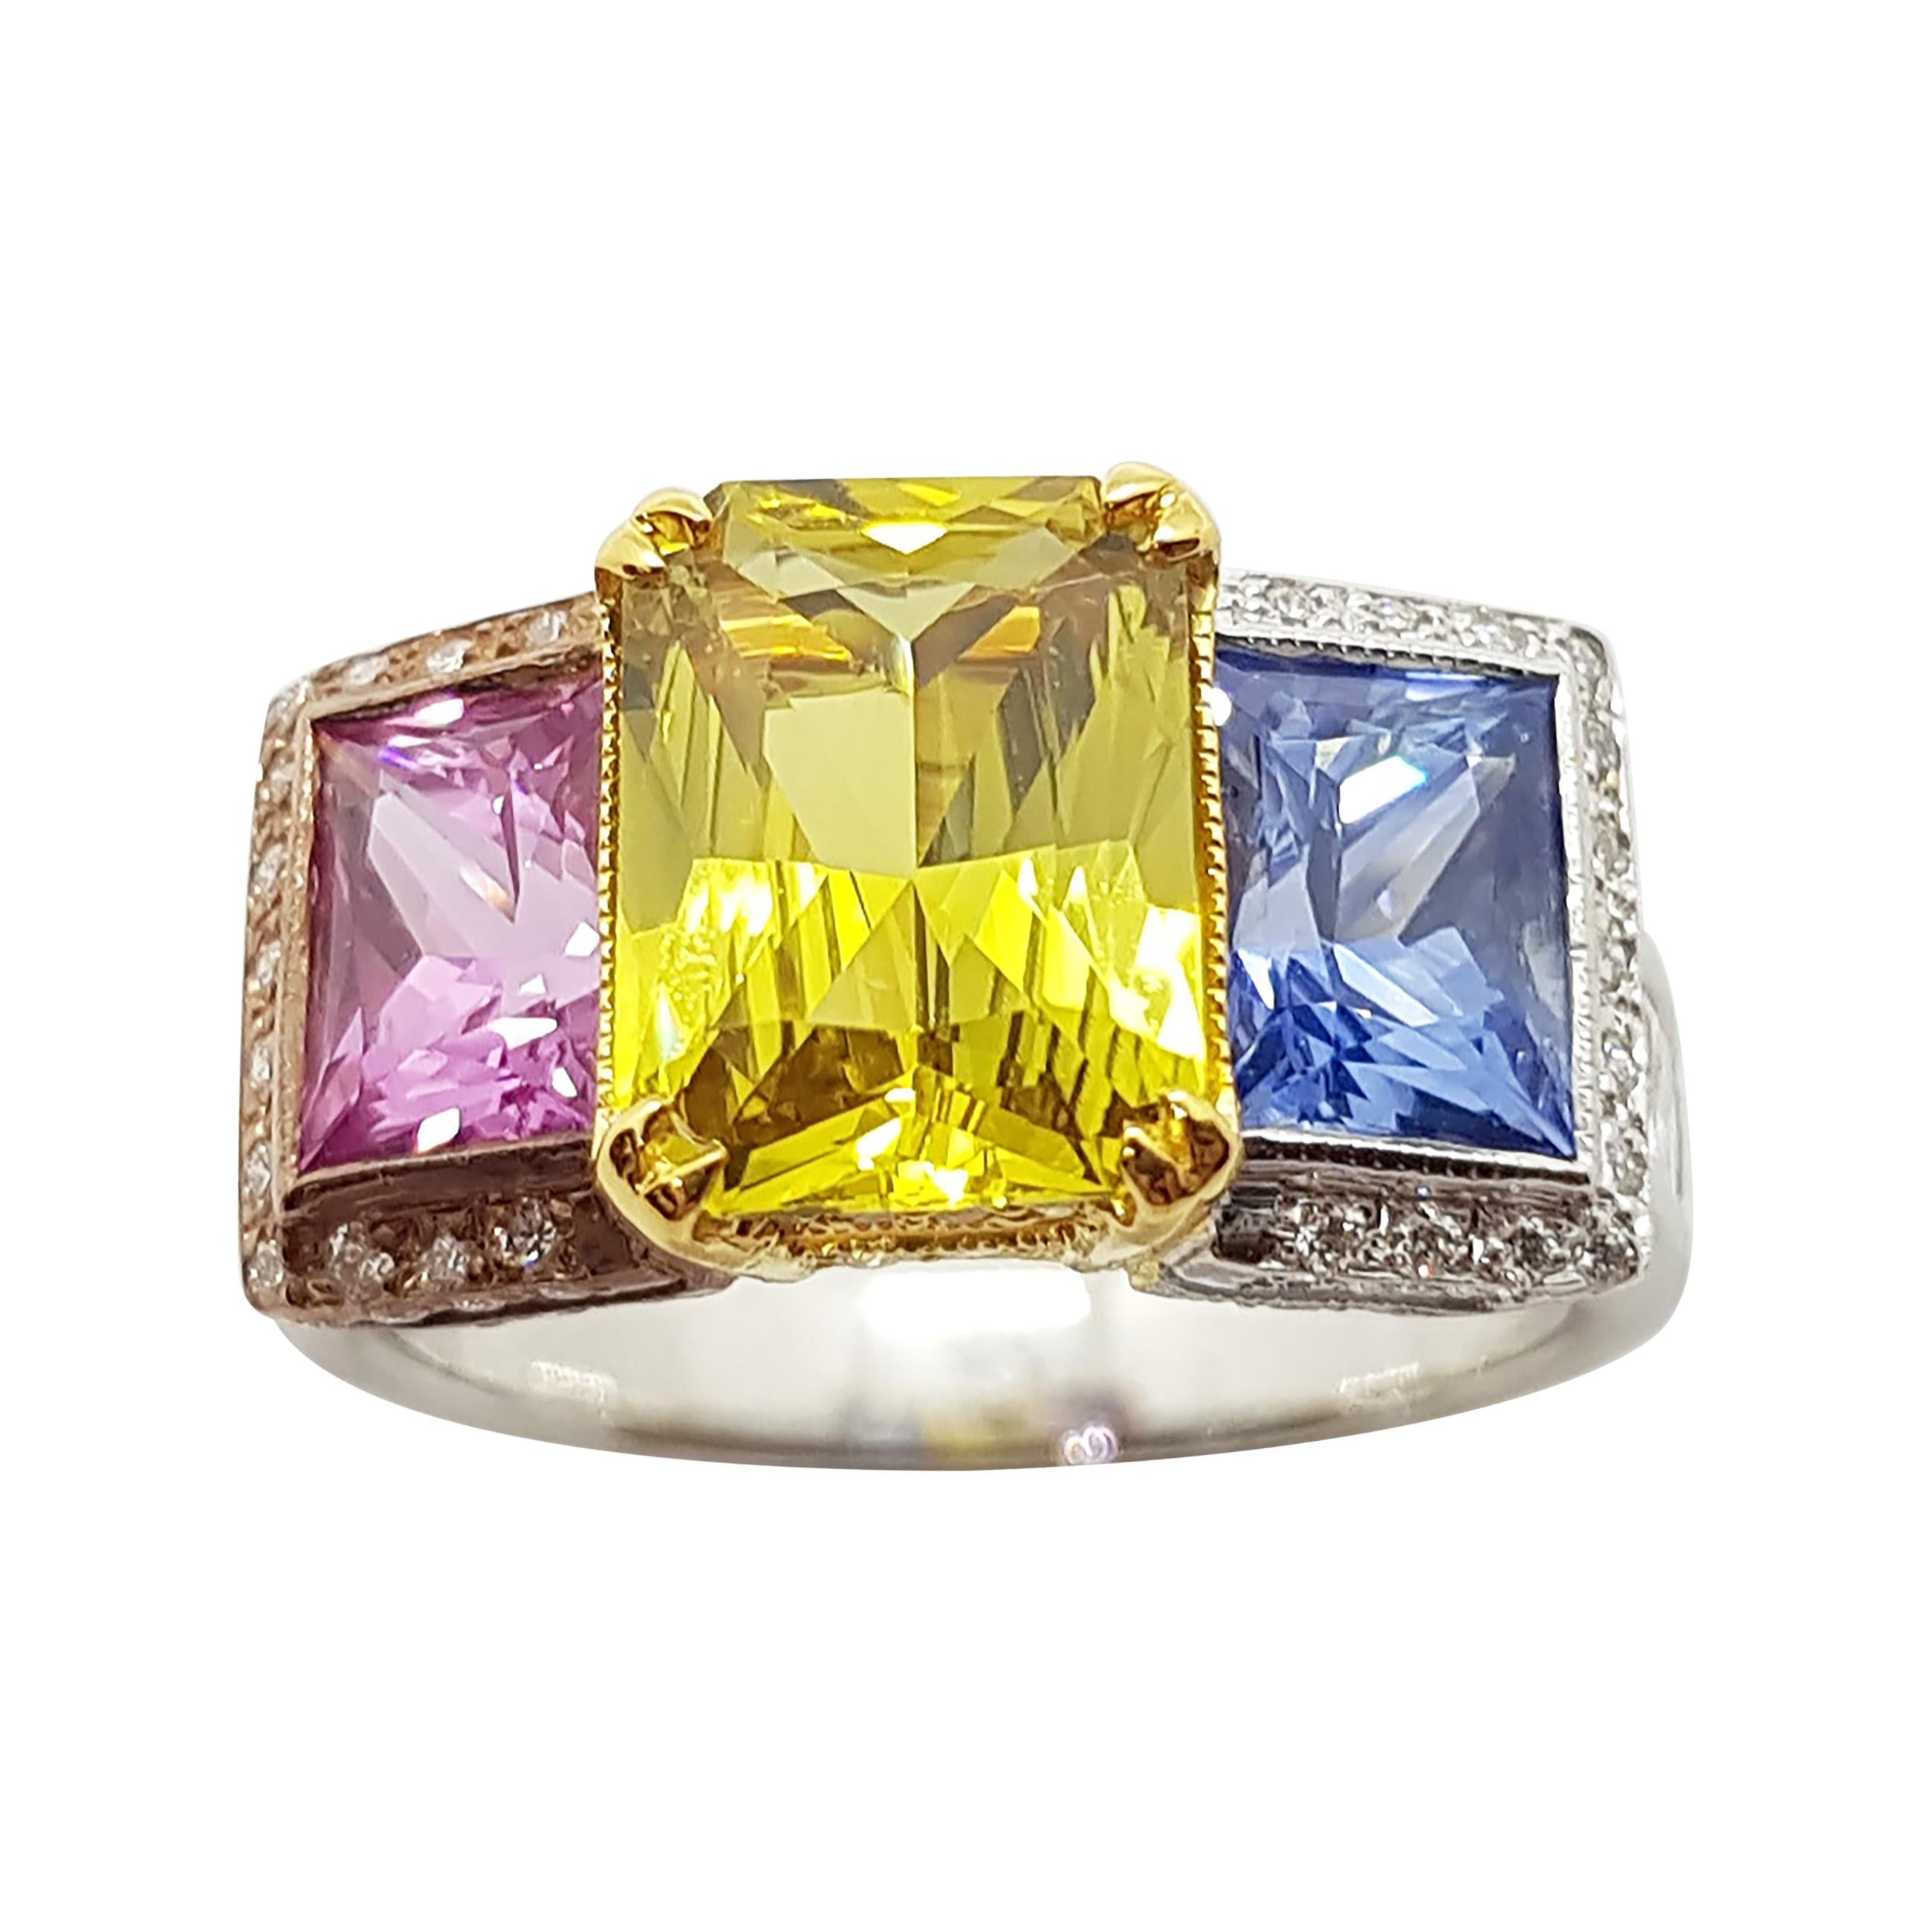 Blue Sapphire, Pink Sapphire, Yellow Sapphire Ring Set in 18 Karat White Gold